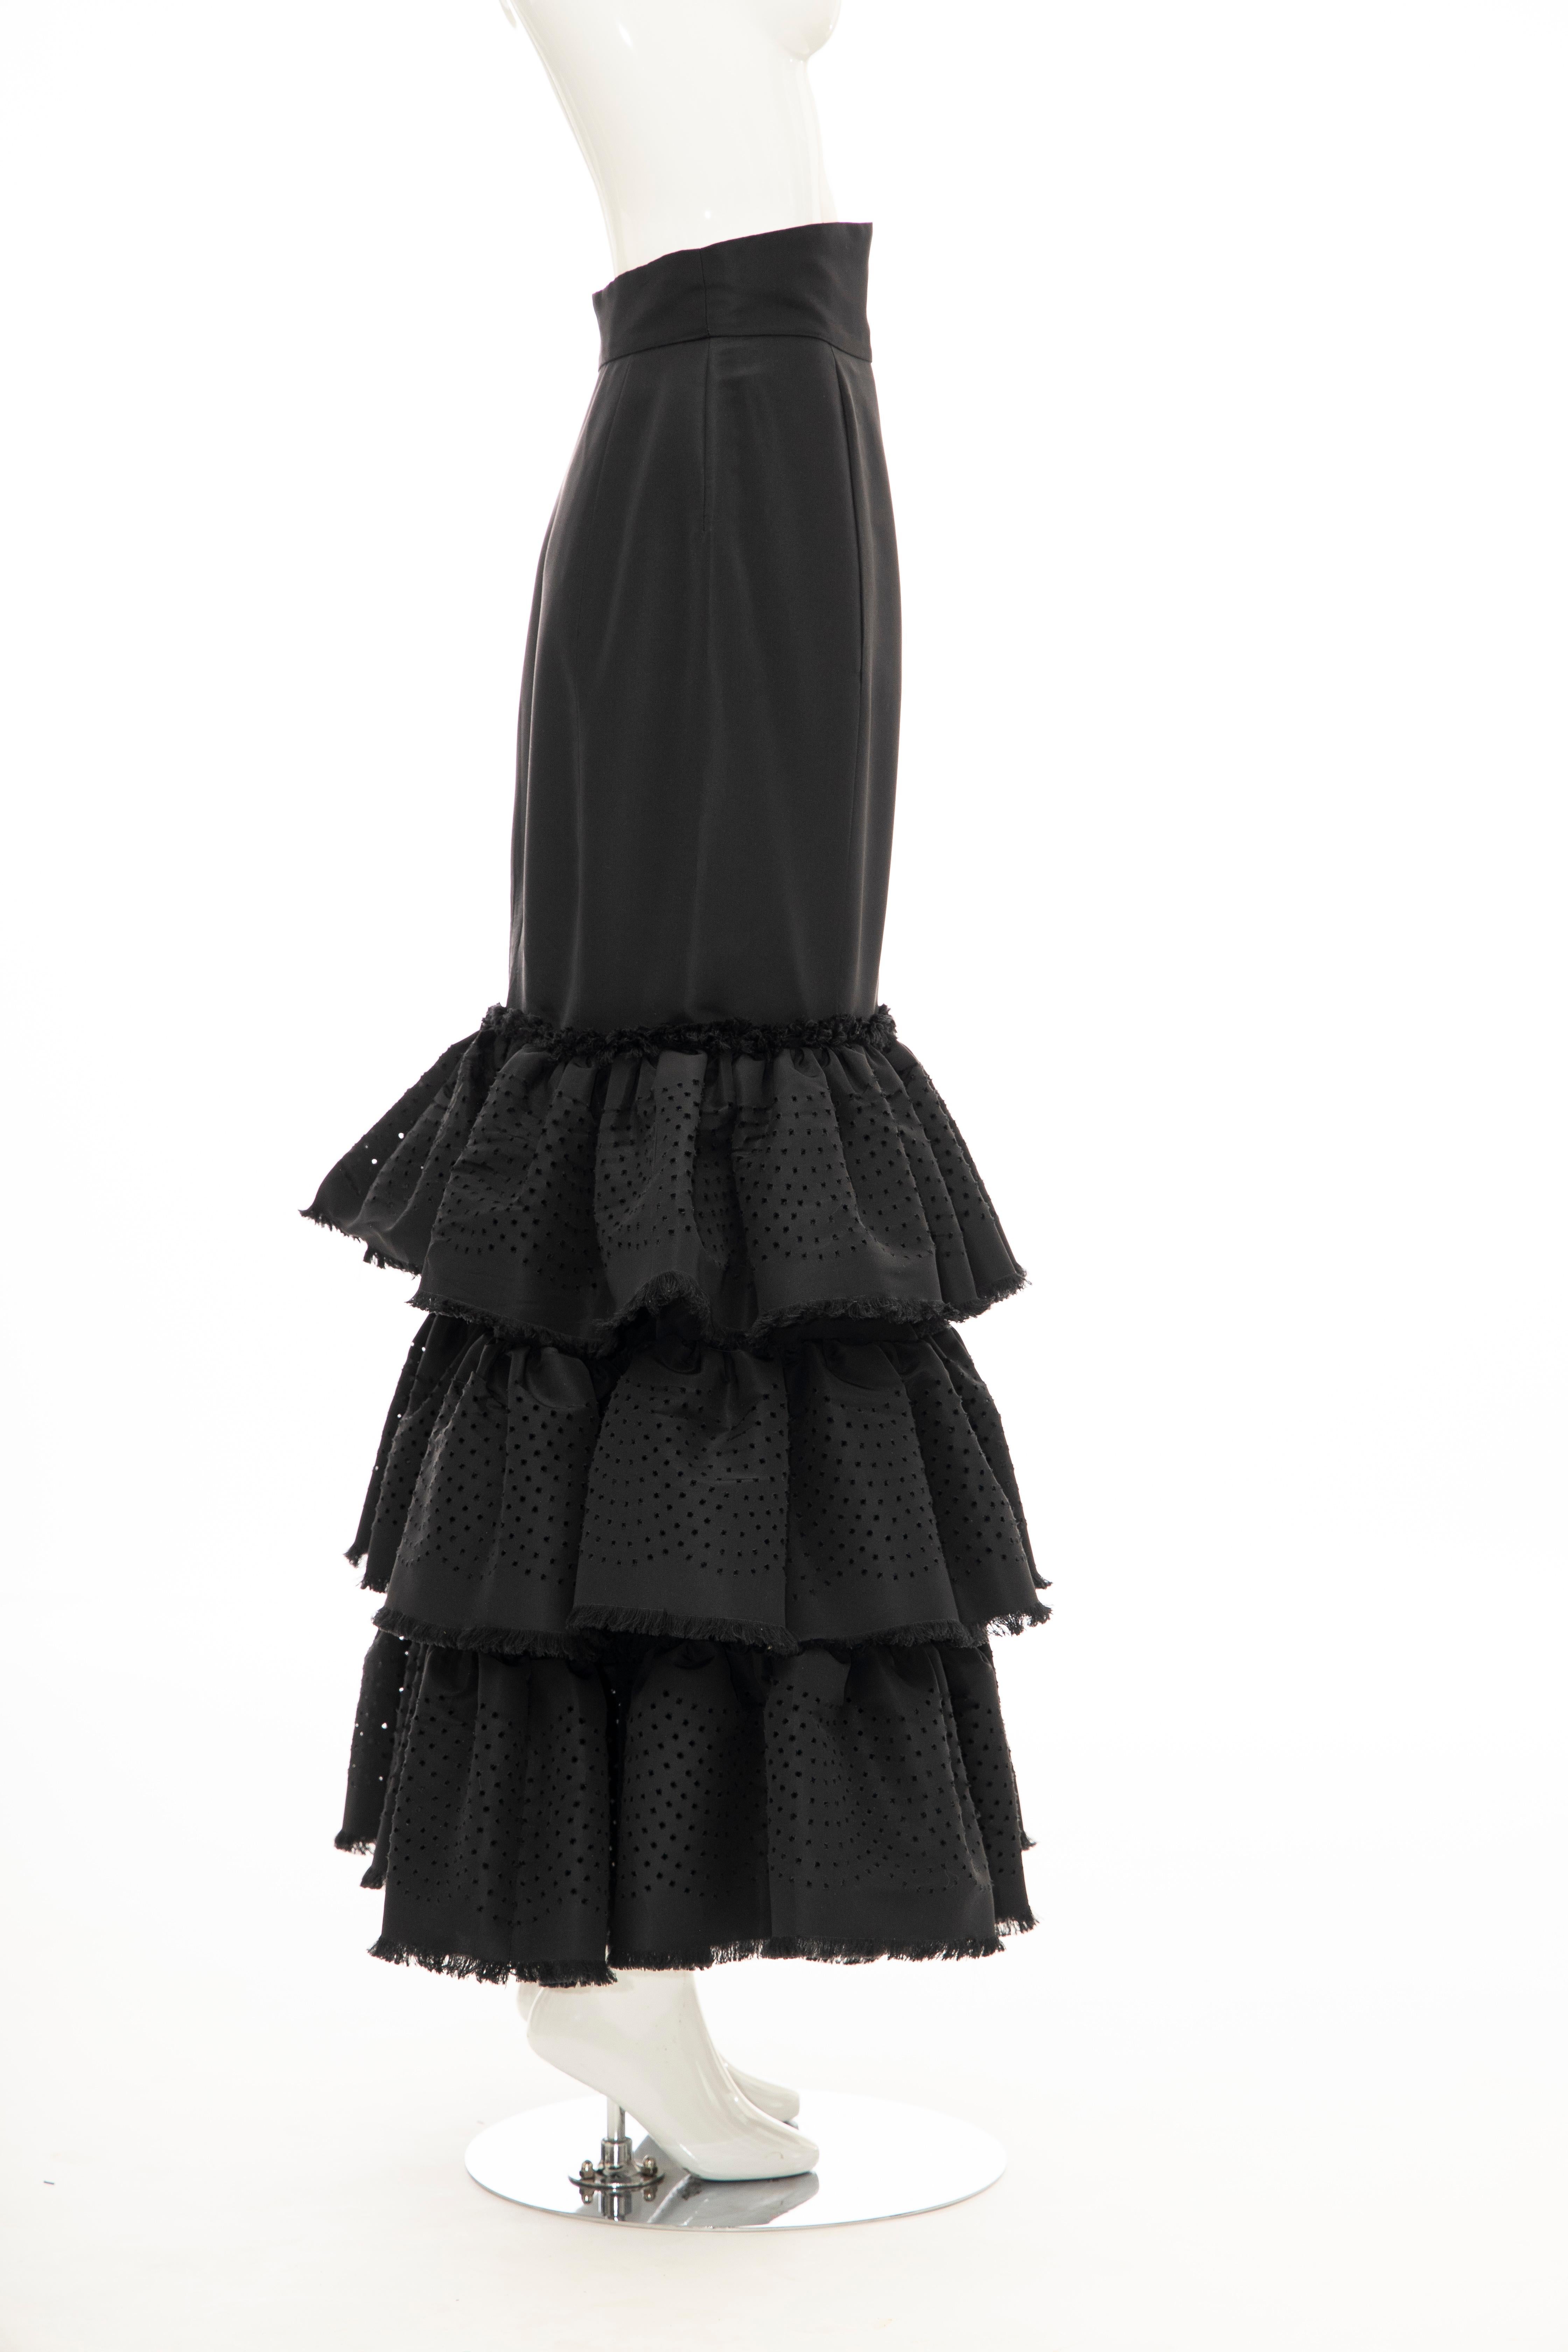 Oscar de la Renta Black Punched Silk Faille Evening Skirt, Fall 2001 For Sale 4